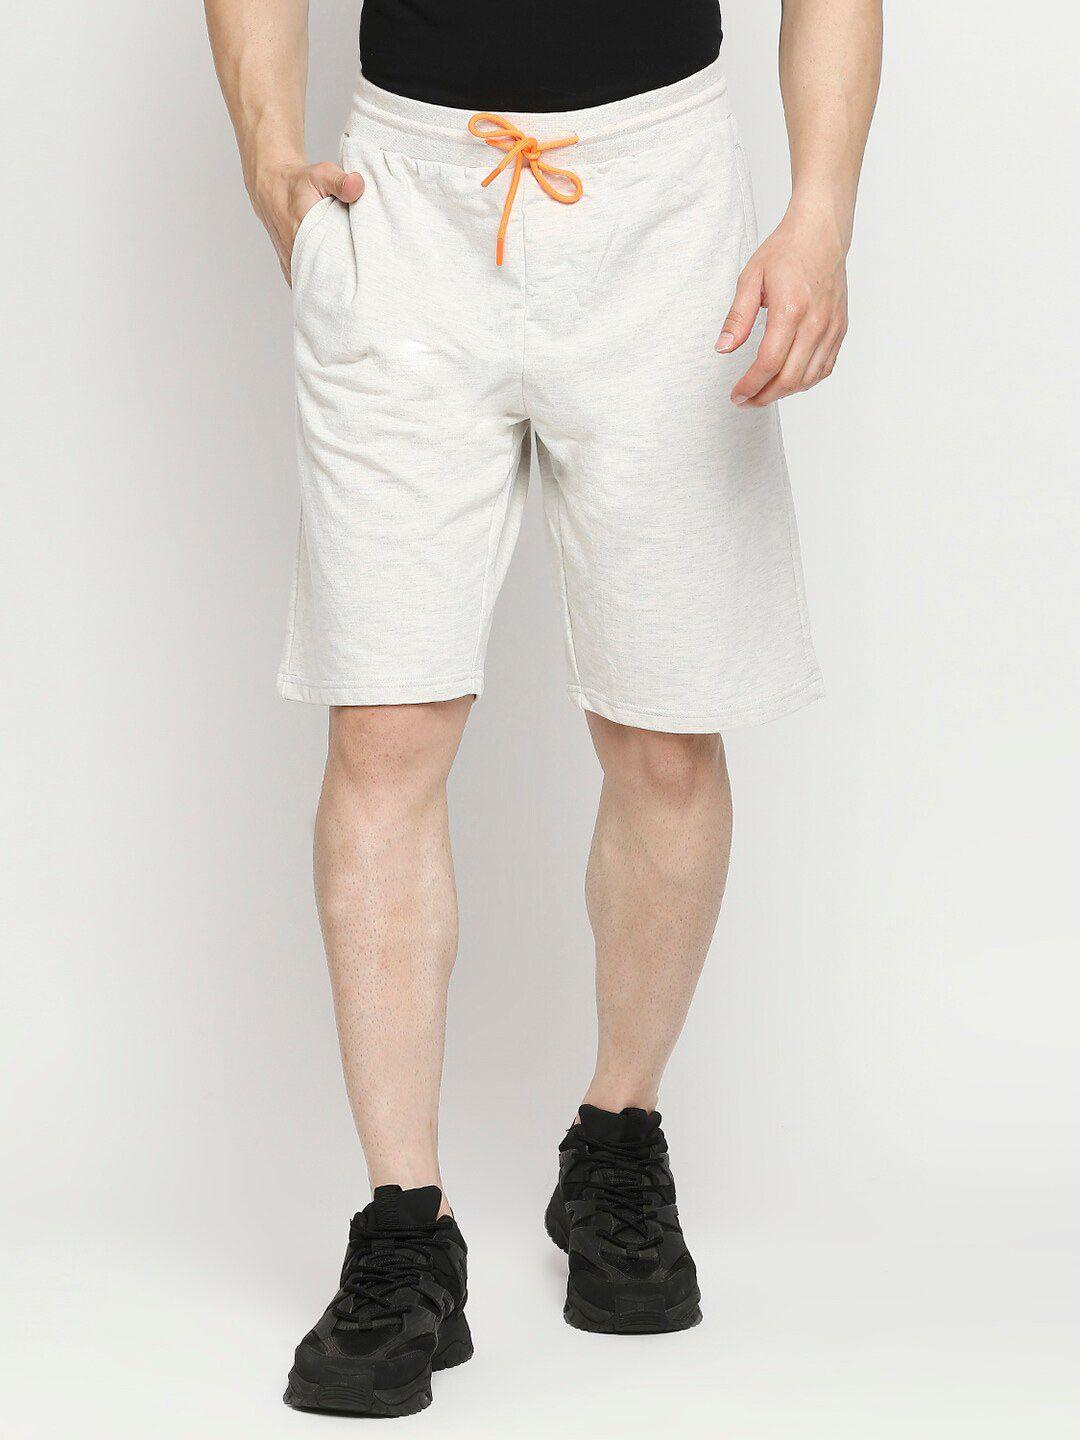 underjeans-by-spykar-men-white-solid-shorts